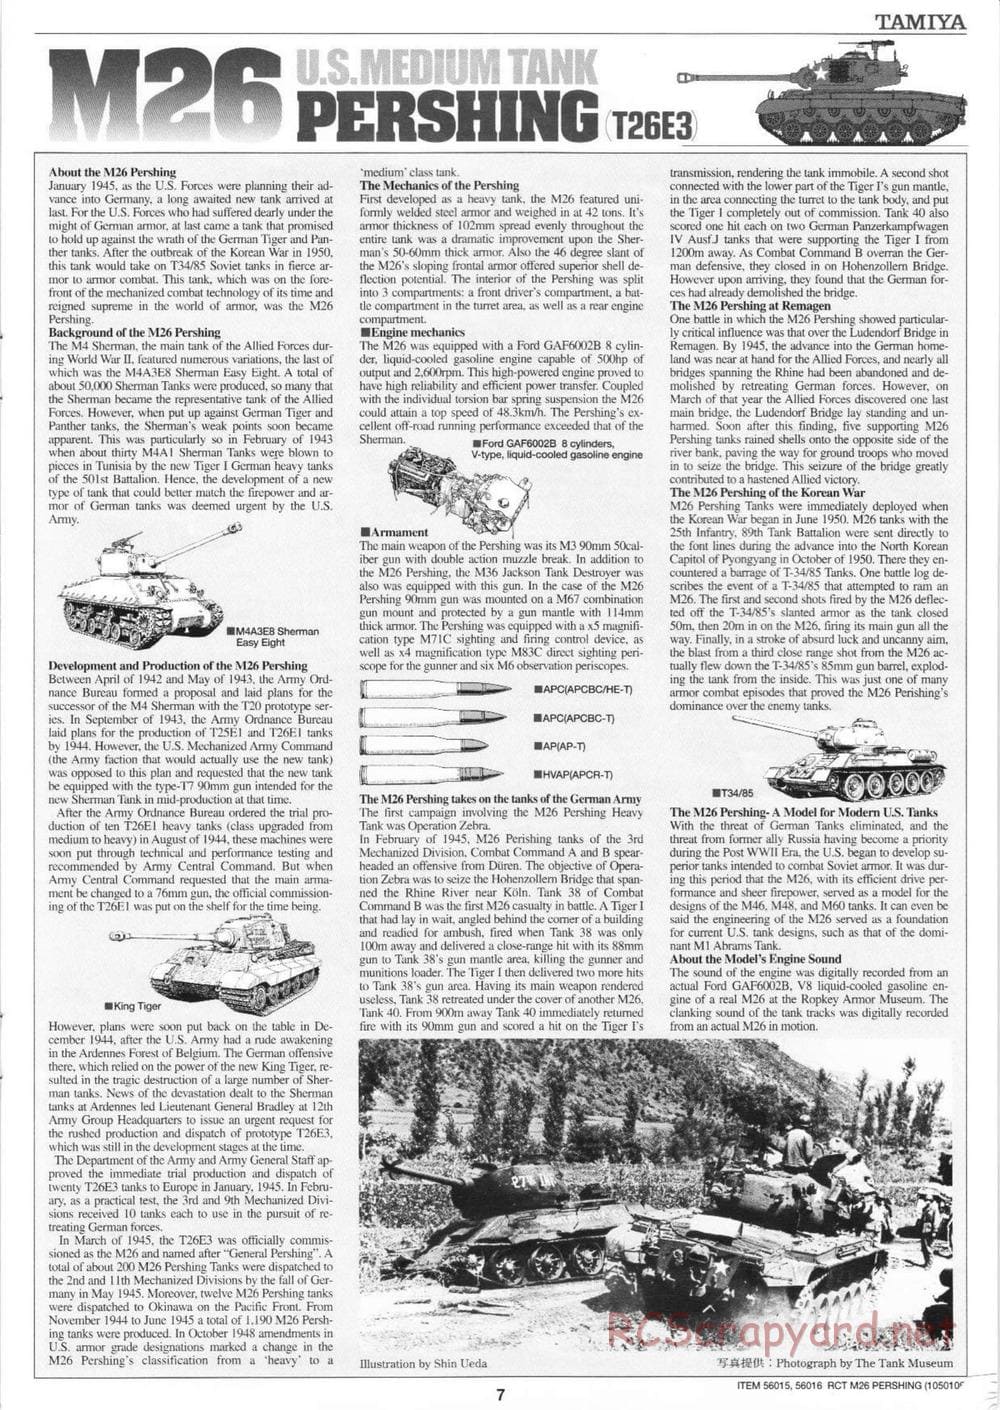 Tamiya - M26 Pershing - 1/16 Scale Chassis - Manual - Page 7